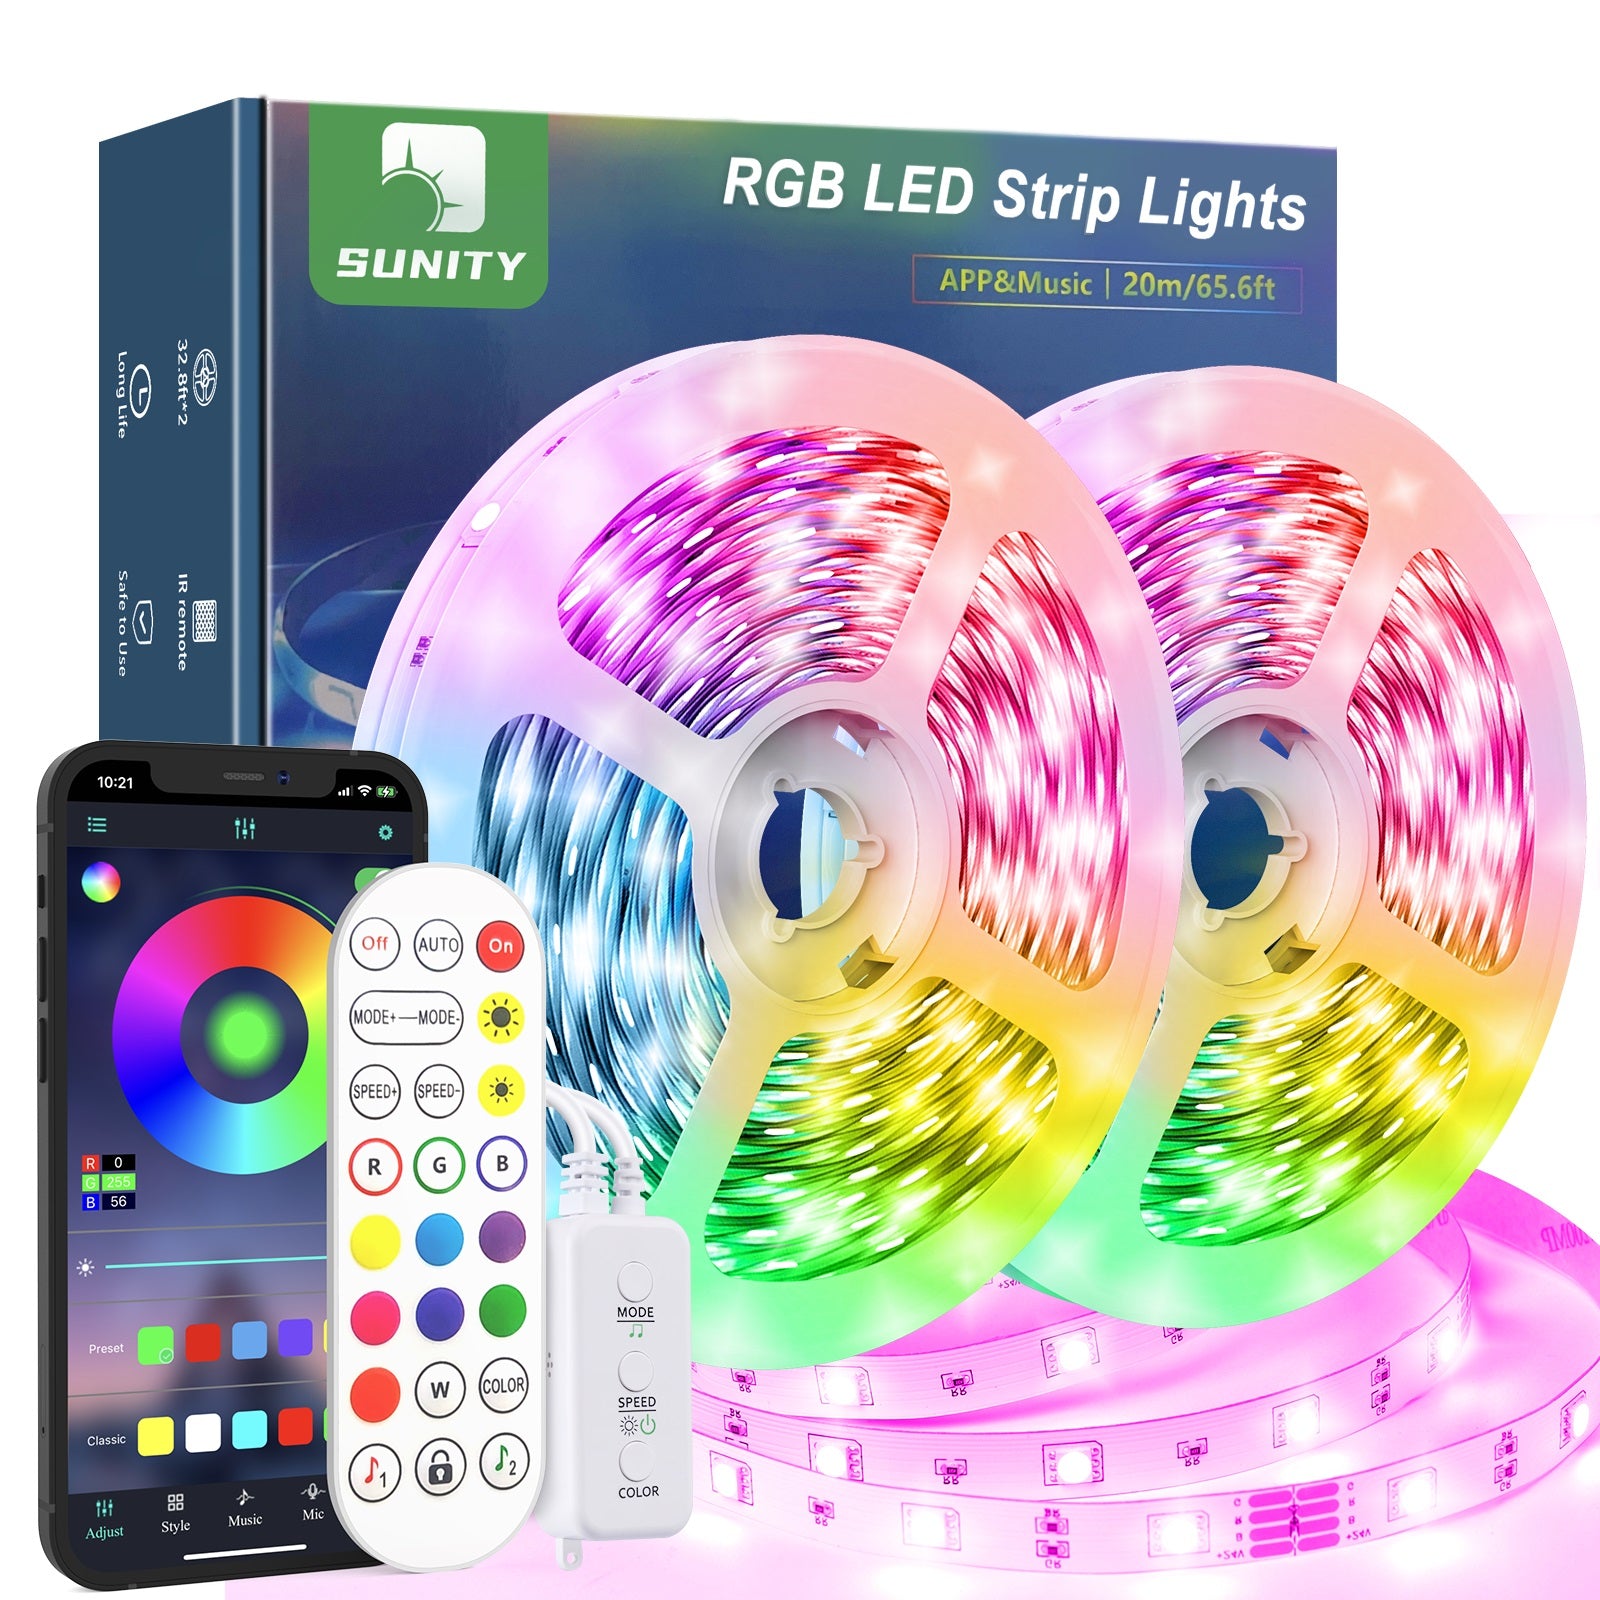 Sunity 20m RGB Led Lights Strip, 600 with Music Sync, APP Con Sunity-Lighting